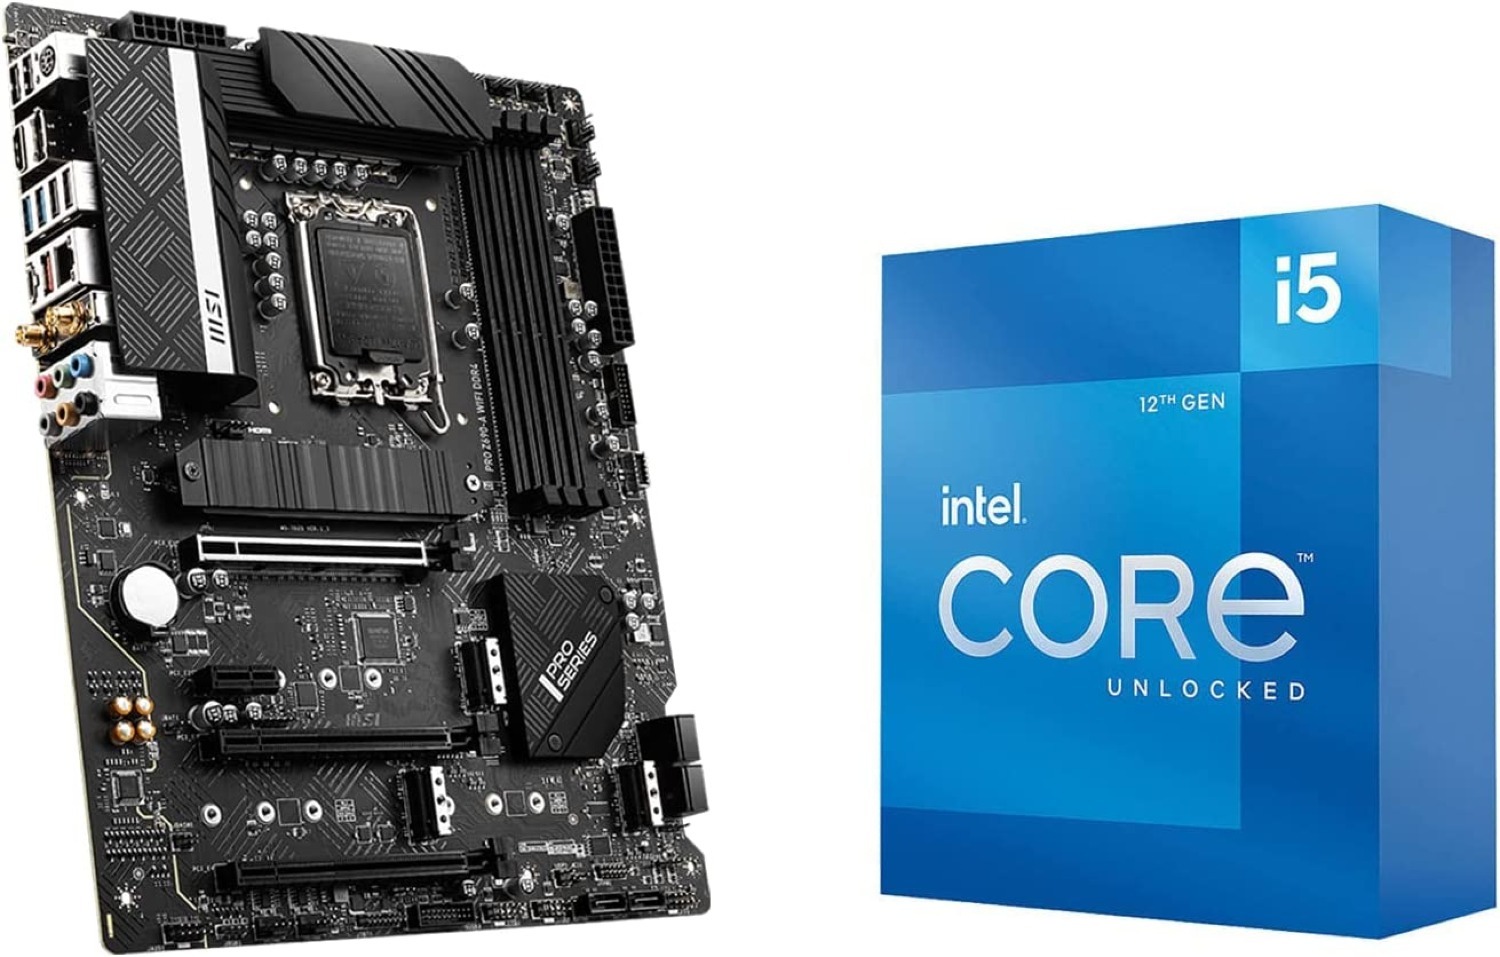 Intel Core i5-12600K 12th Gen CPU + MSI PRO Z690-A WiFi Motherboard Bundle $400 & more + Free Shipping